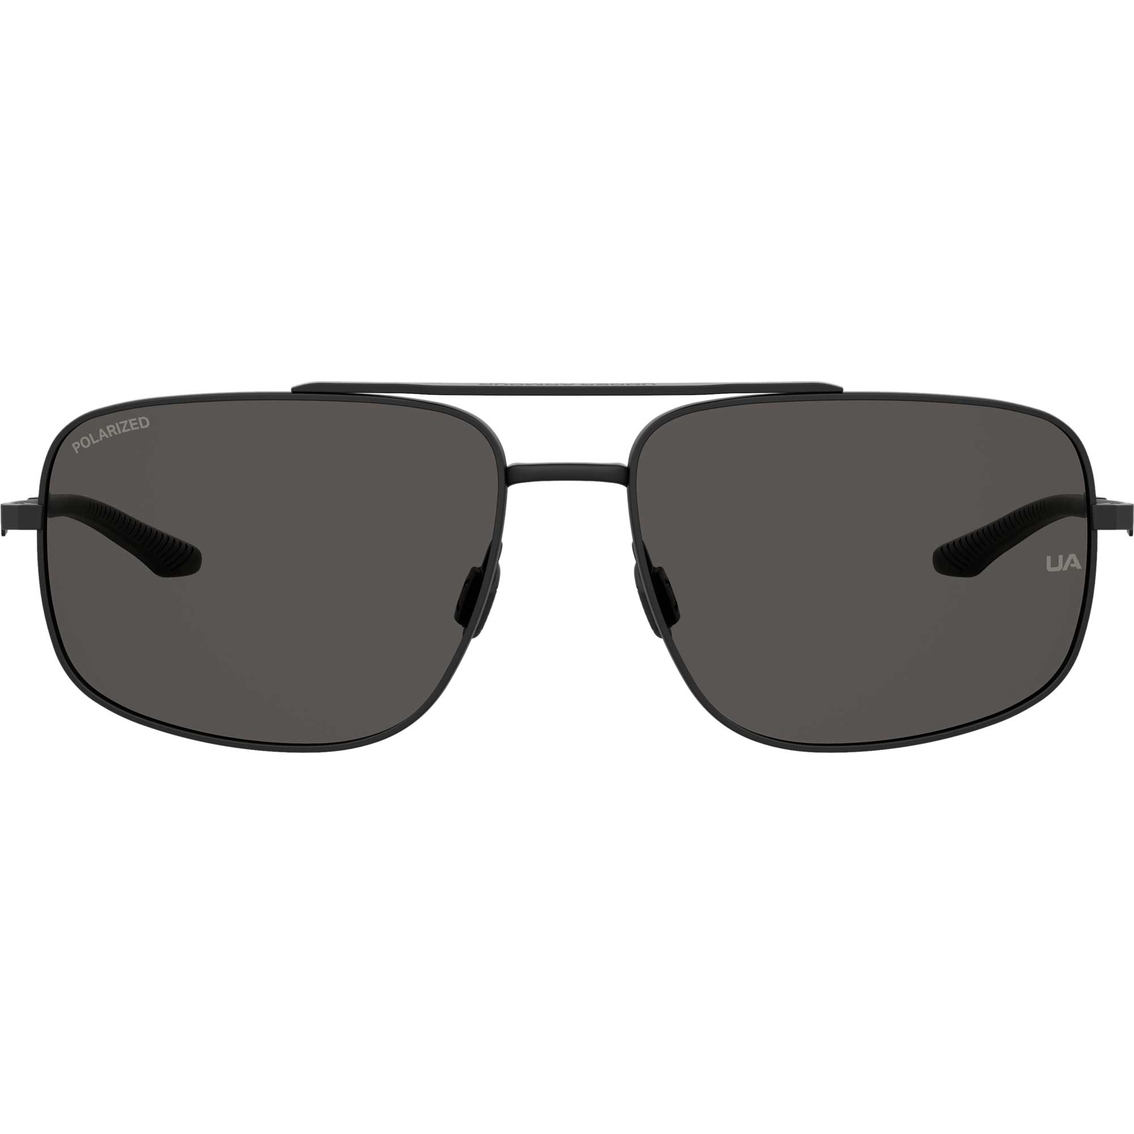 Under Armour Impulse Polarized Sunglasses UA0015/GS - Image 2 of 4